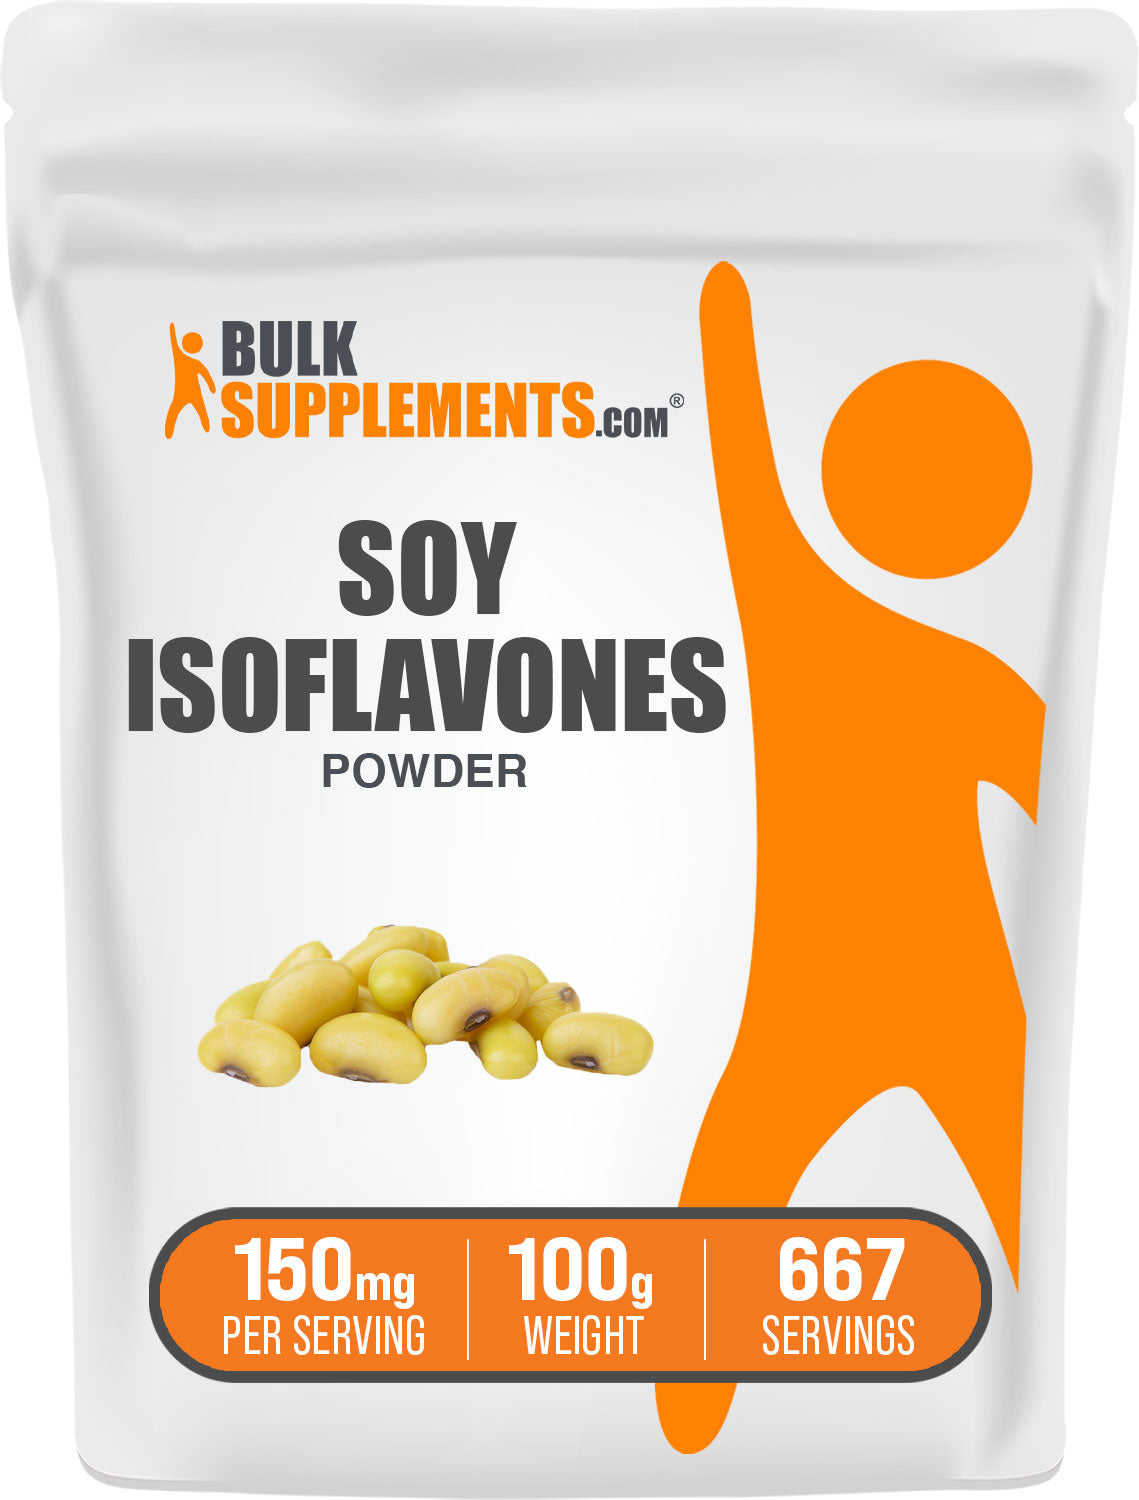 BulkSupplements.com Soy Isoflavones Powder 100g Bag